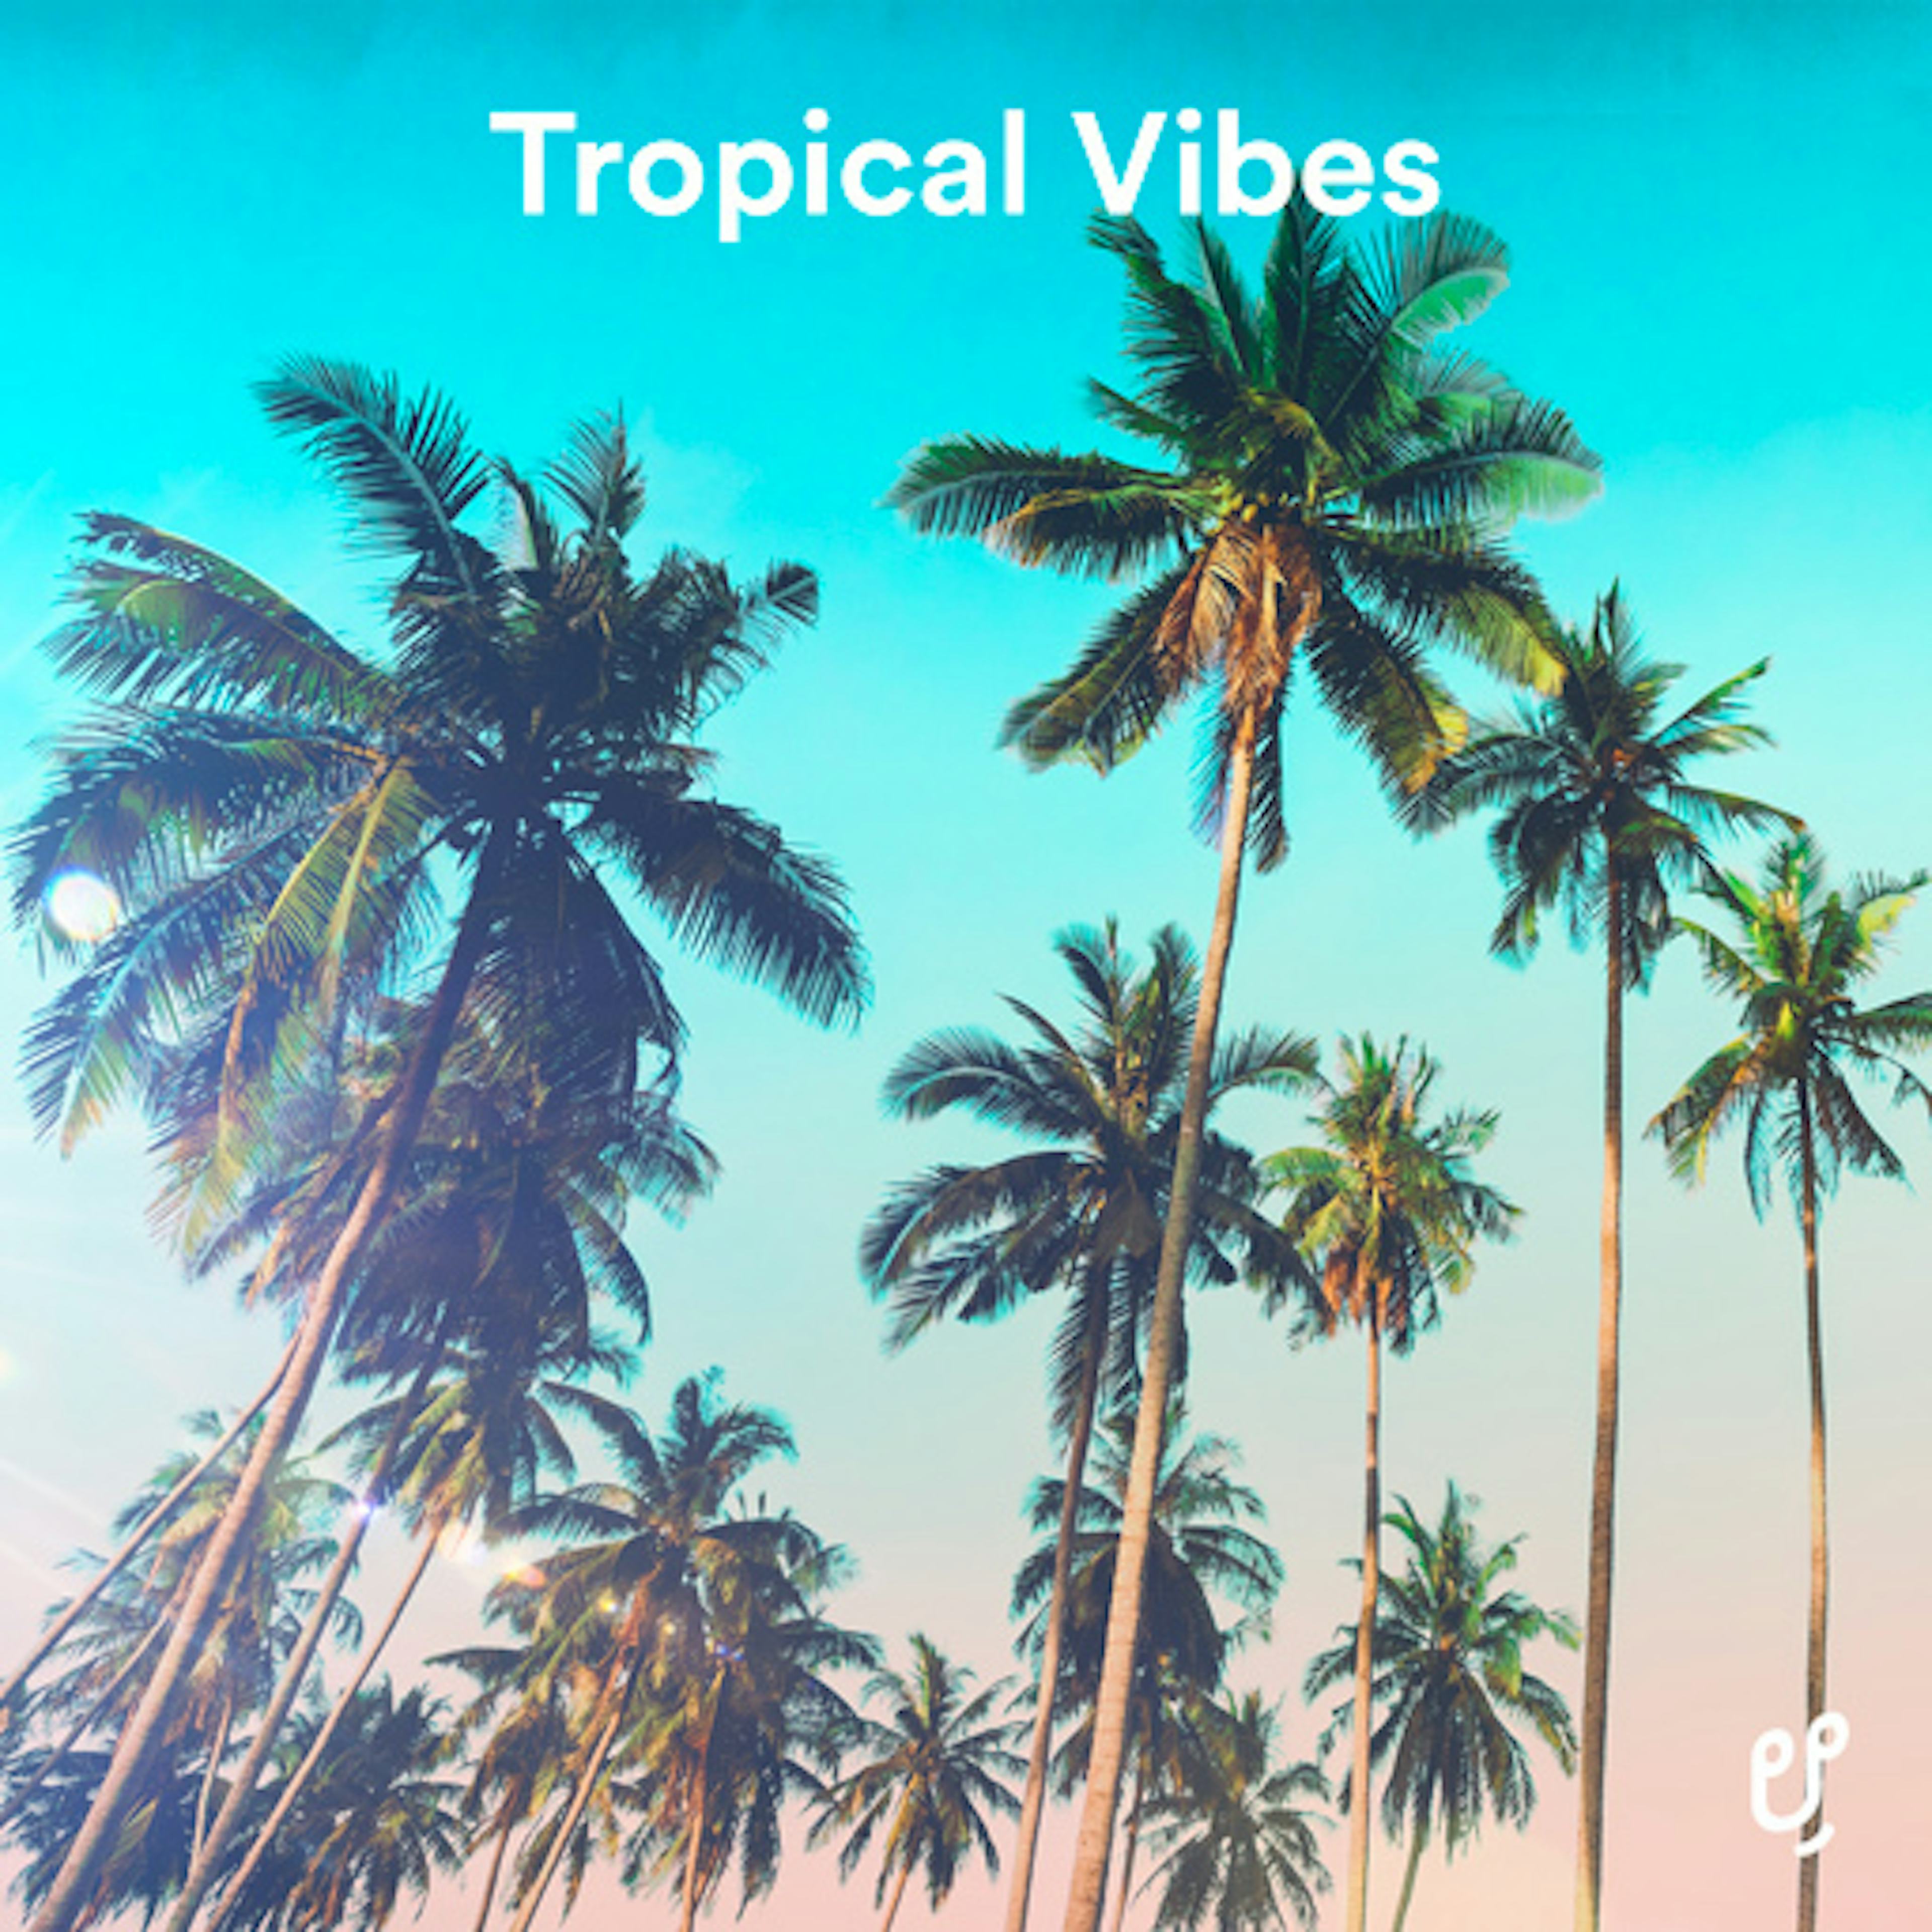 Tropical Vibes artwork